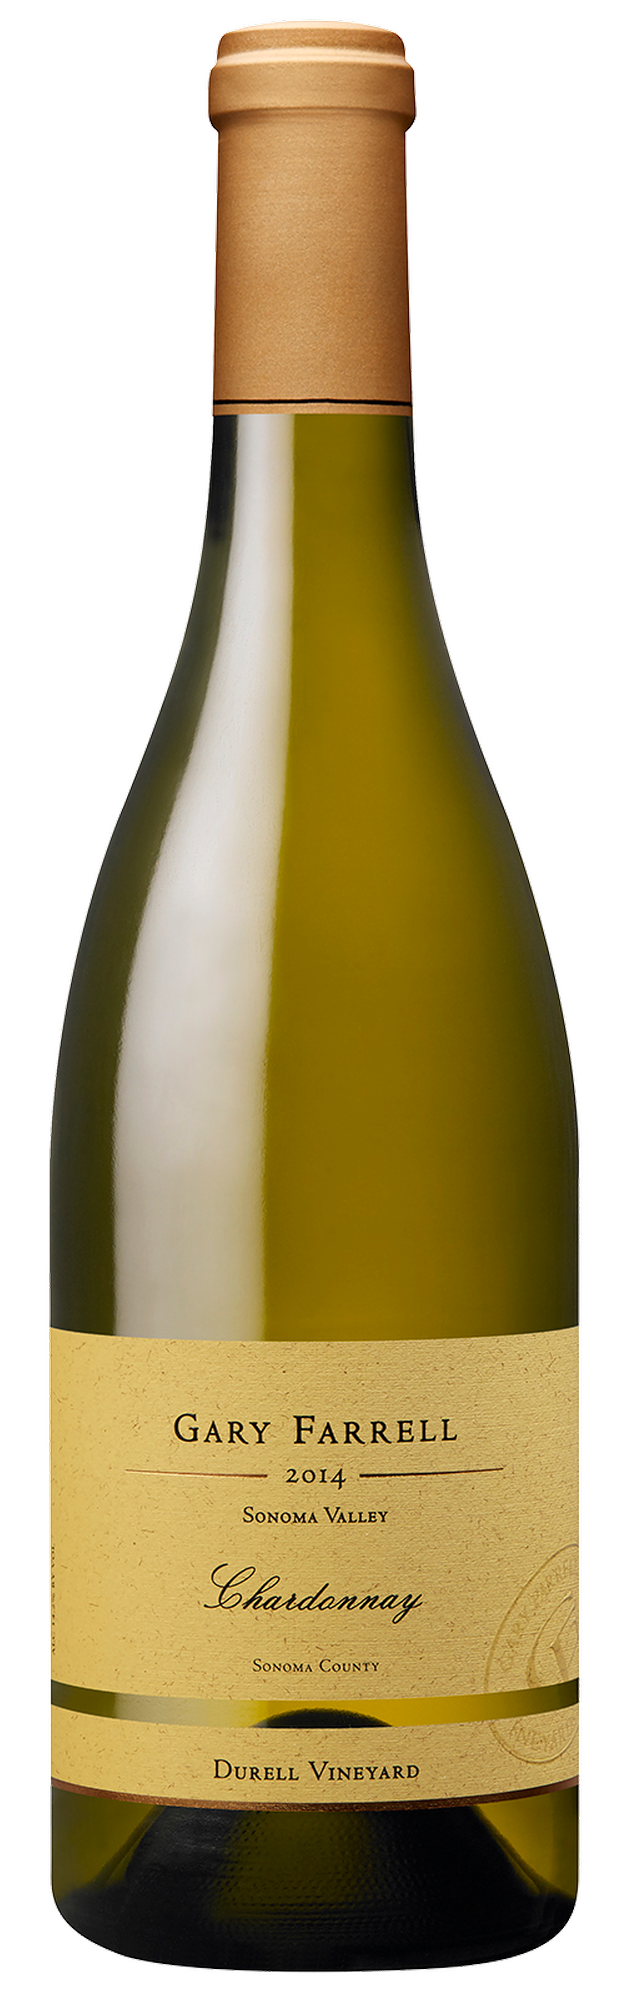 2014 Durell Vineyard Chardonnay